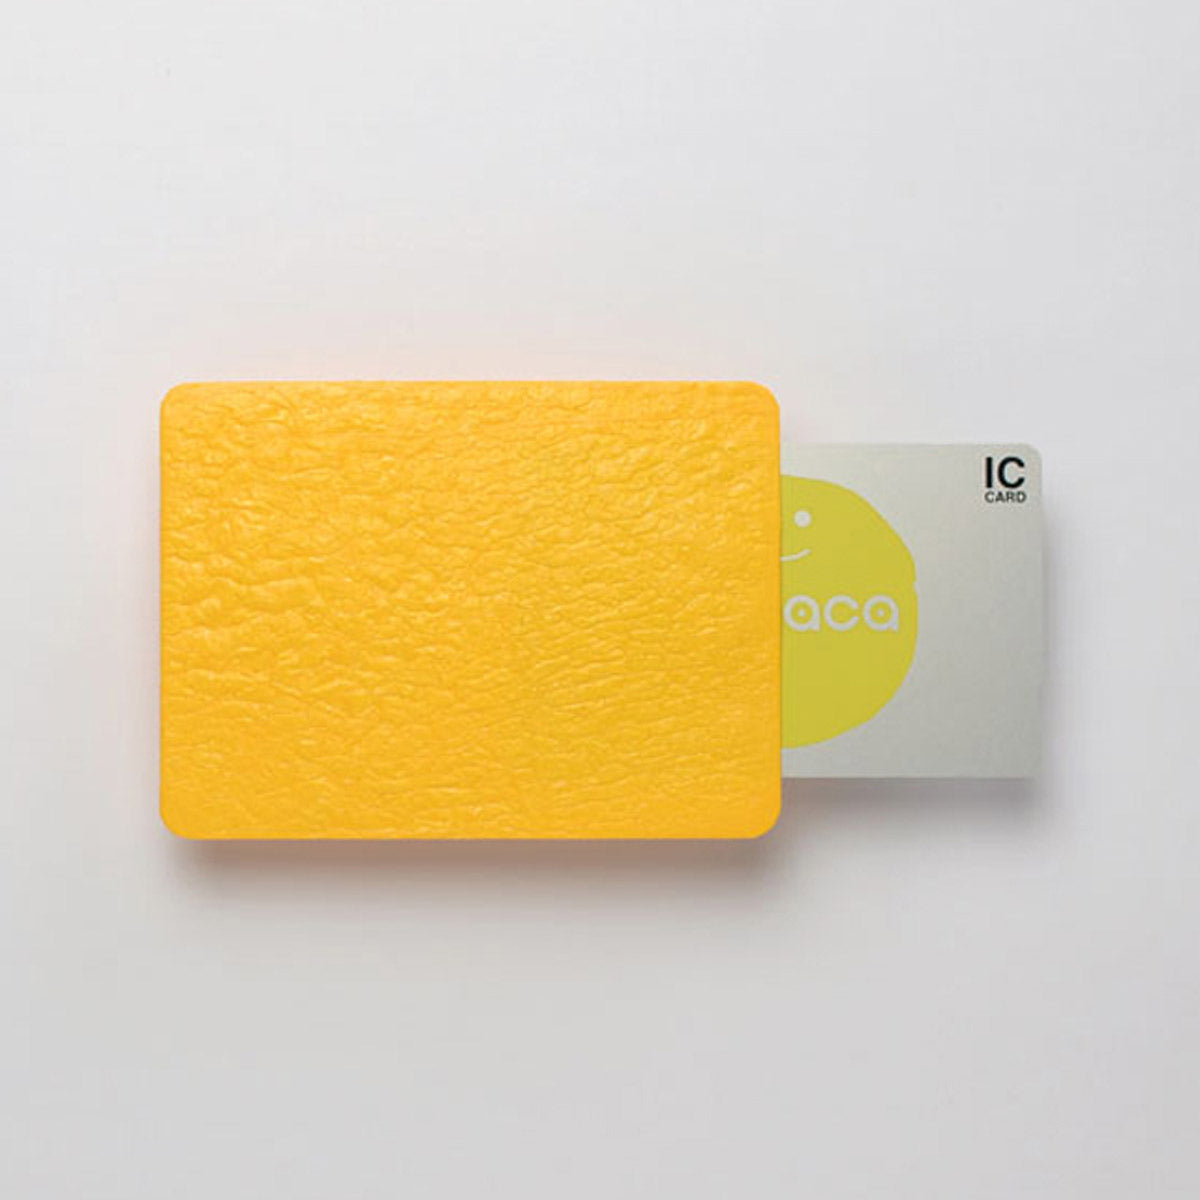 PE CARD HOLDER / Yellow